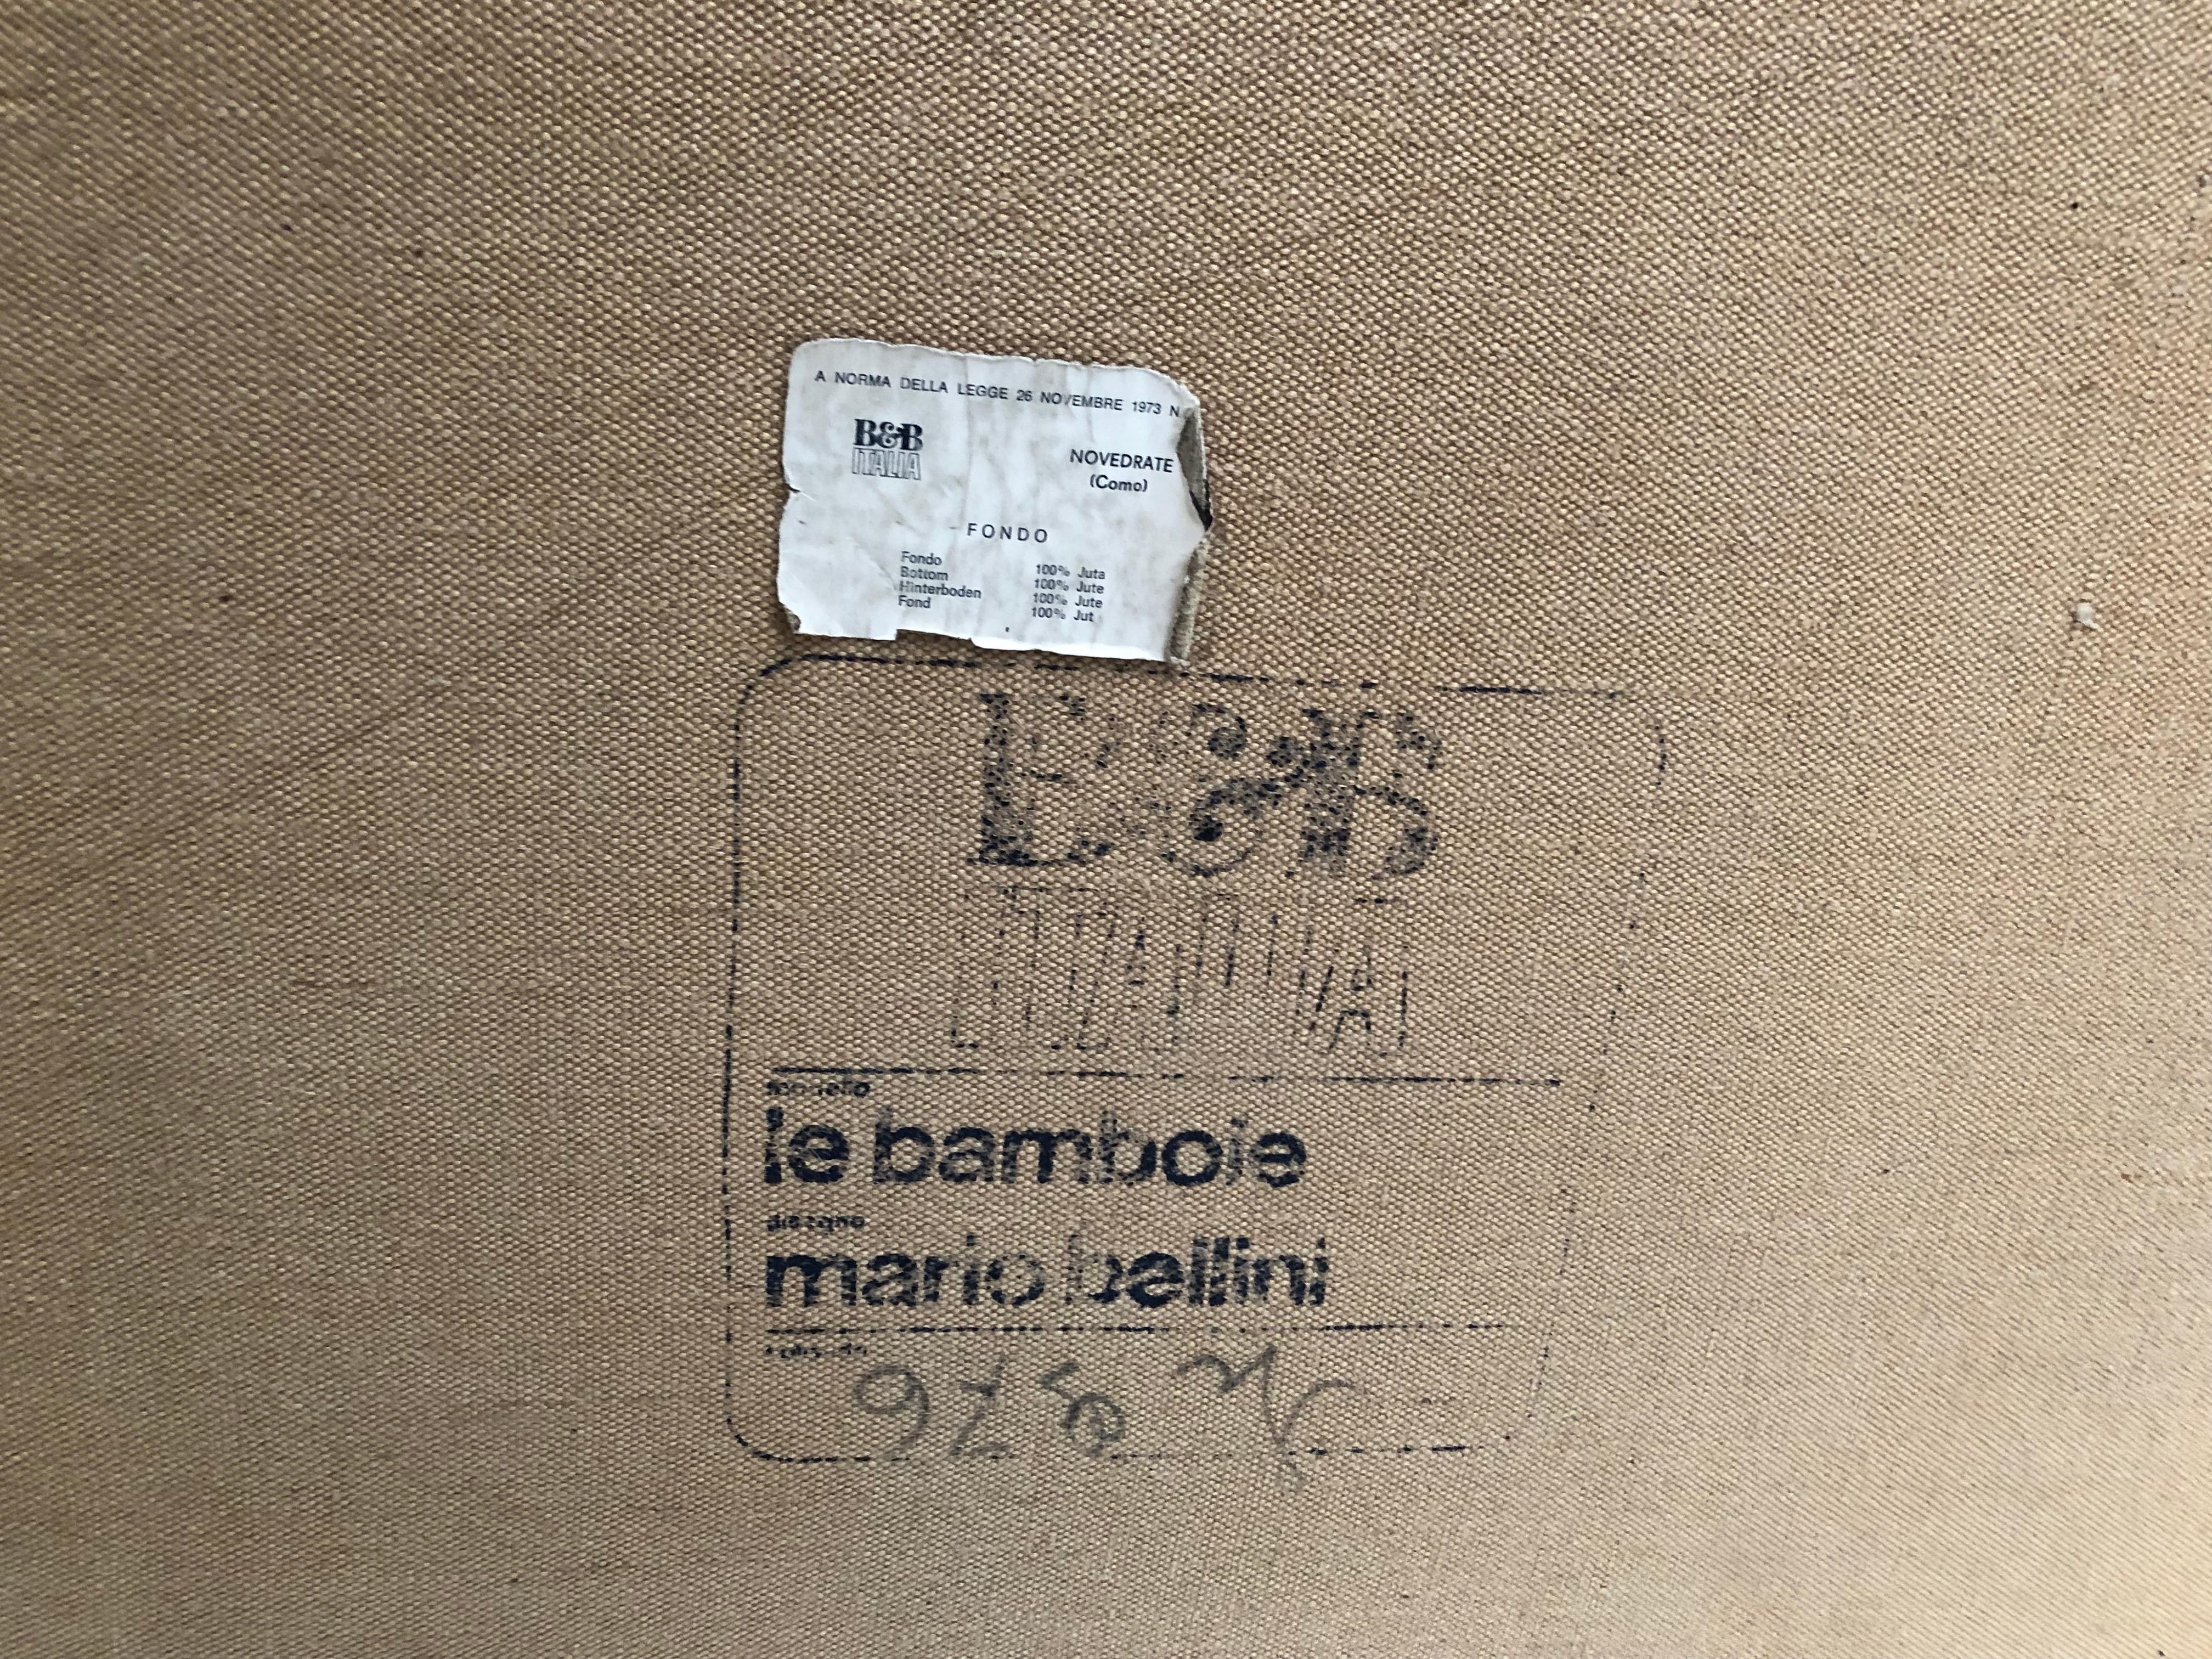 Leather 'Bambole' Living Room Set by Mario Bellini, 1972, Original Period Labels 10